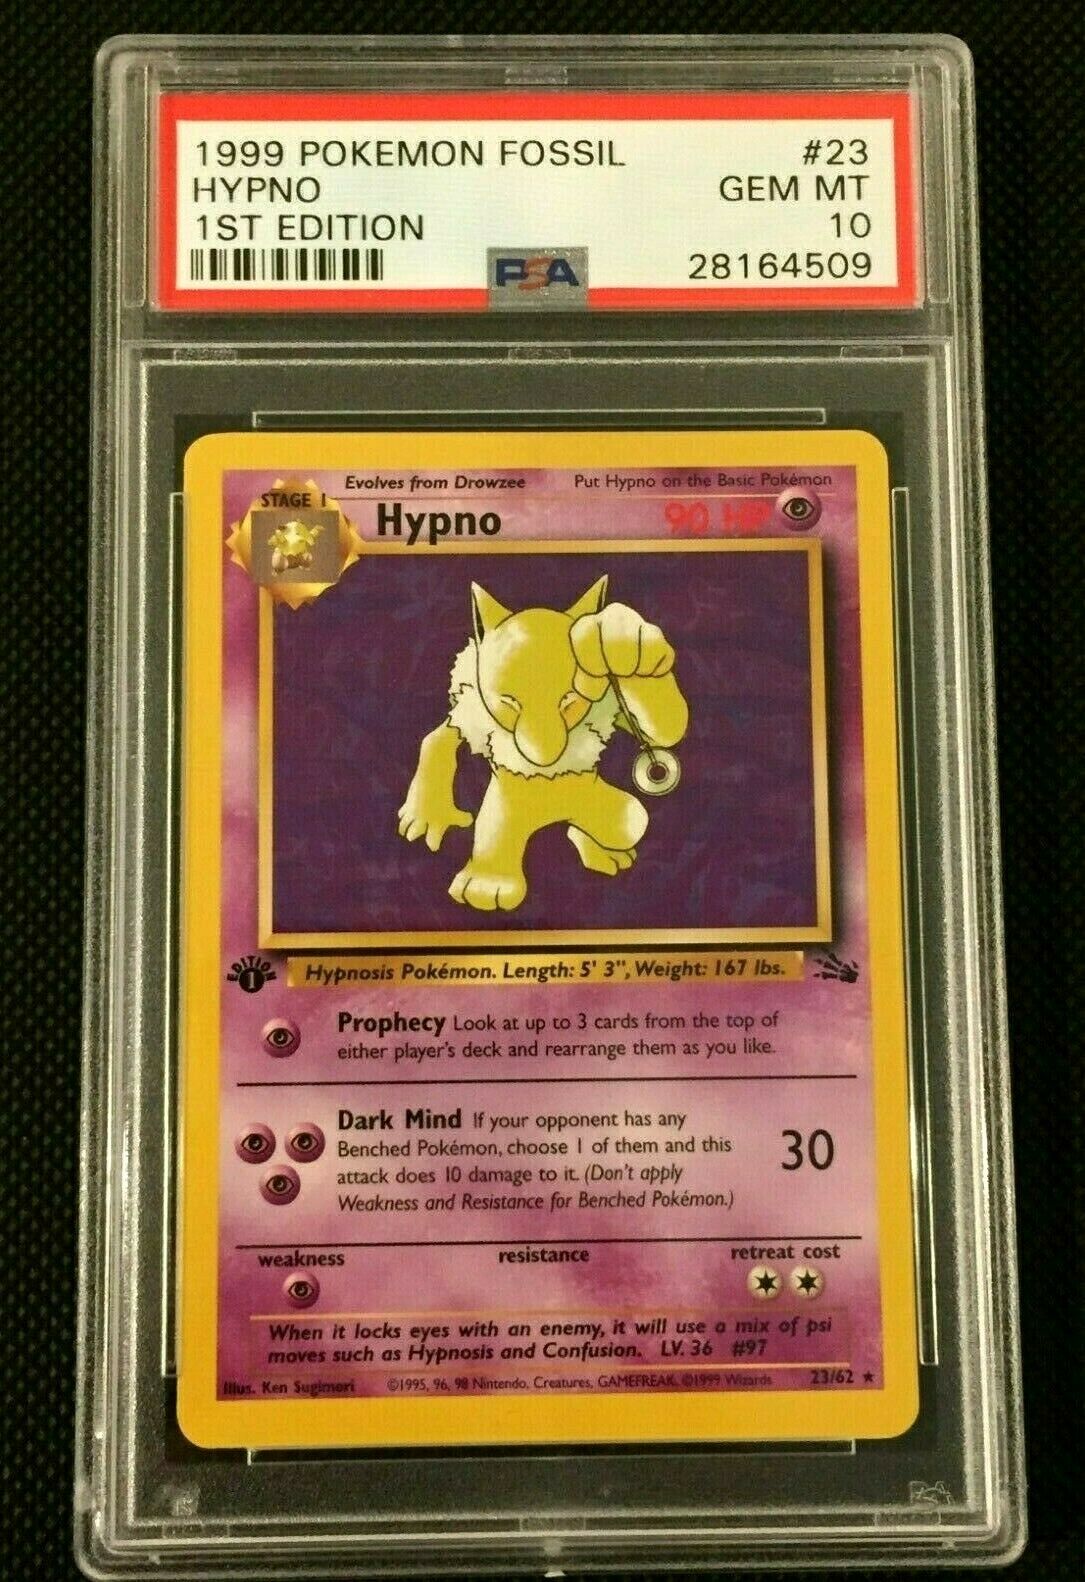 PSA 10 GEM MINT Hypno 1st Edition Rare Fossil 1999 Pokemon Card 23